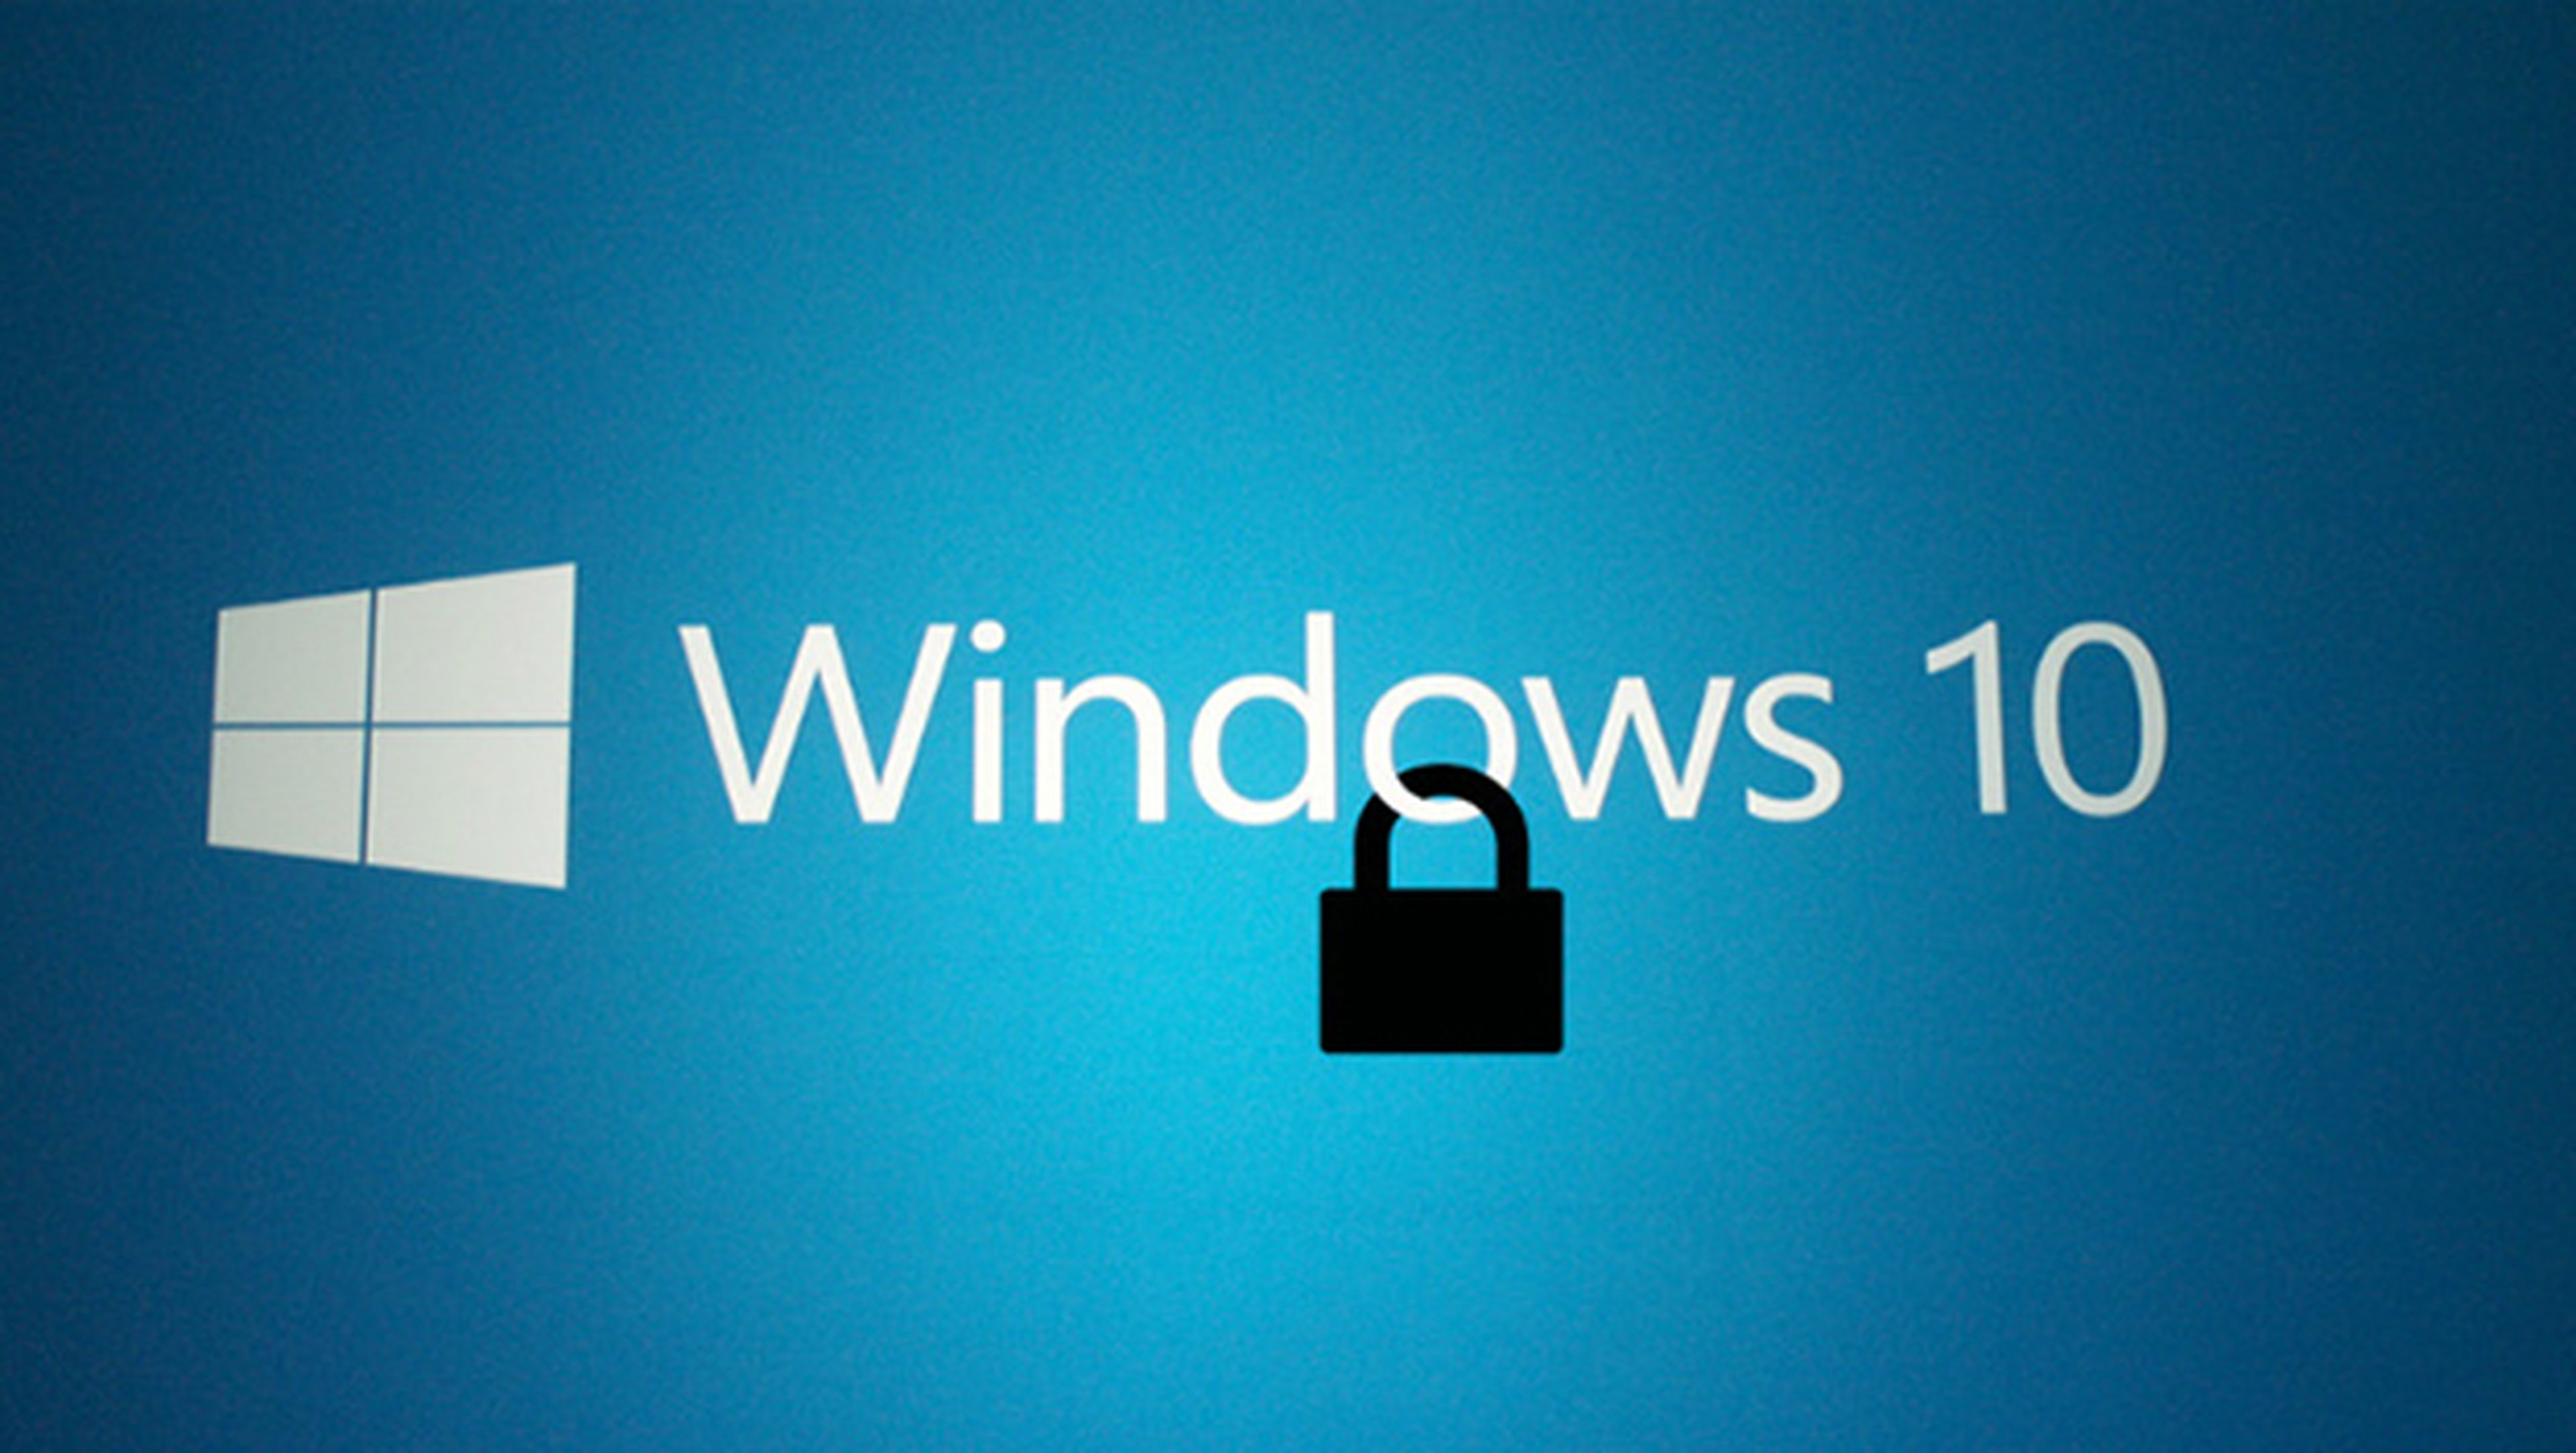 Windows 10: nuevo sistema backup en la Fall Creators Update